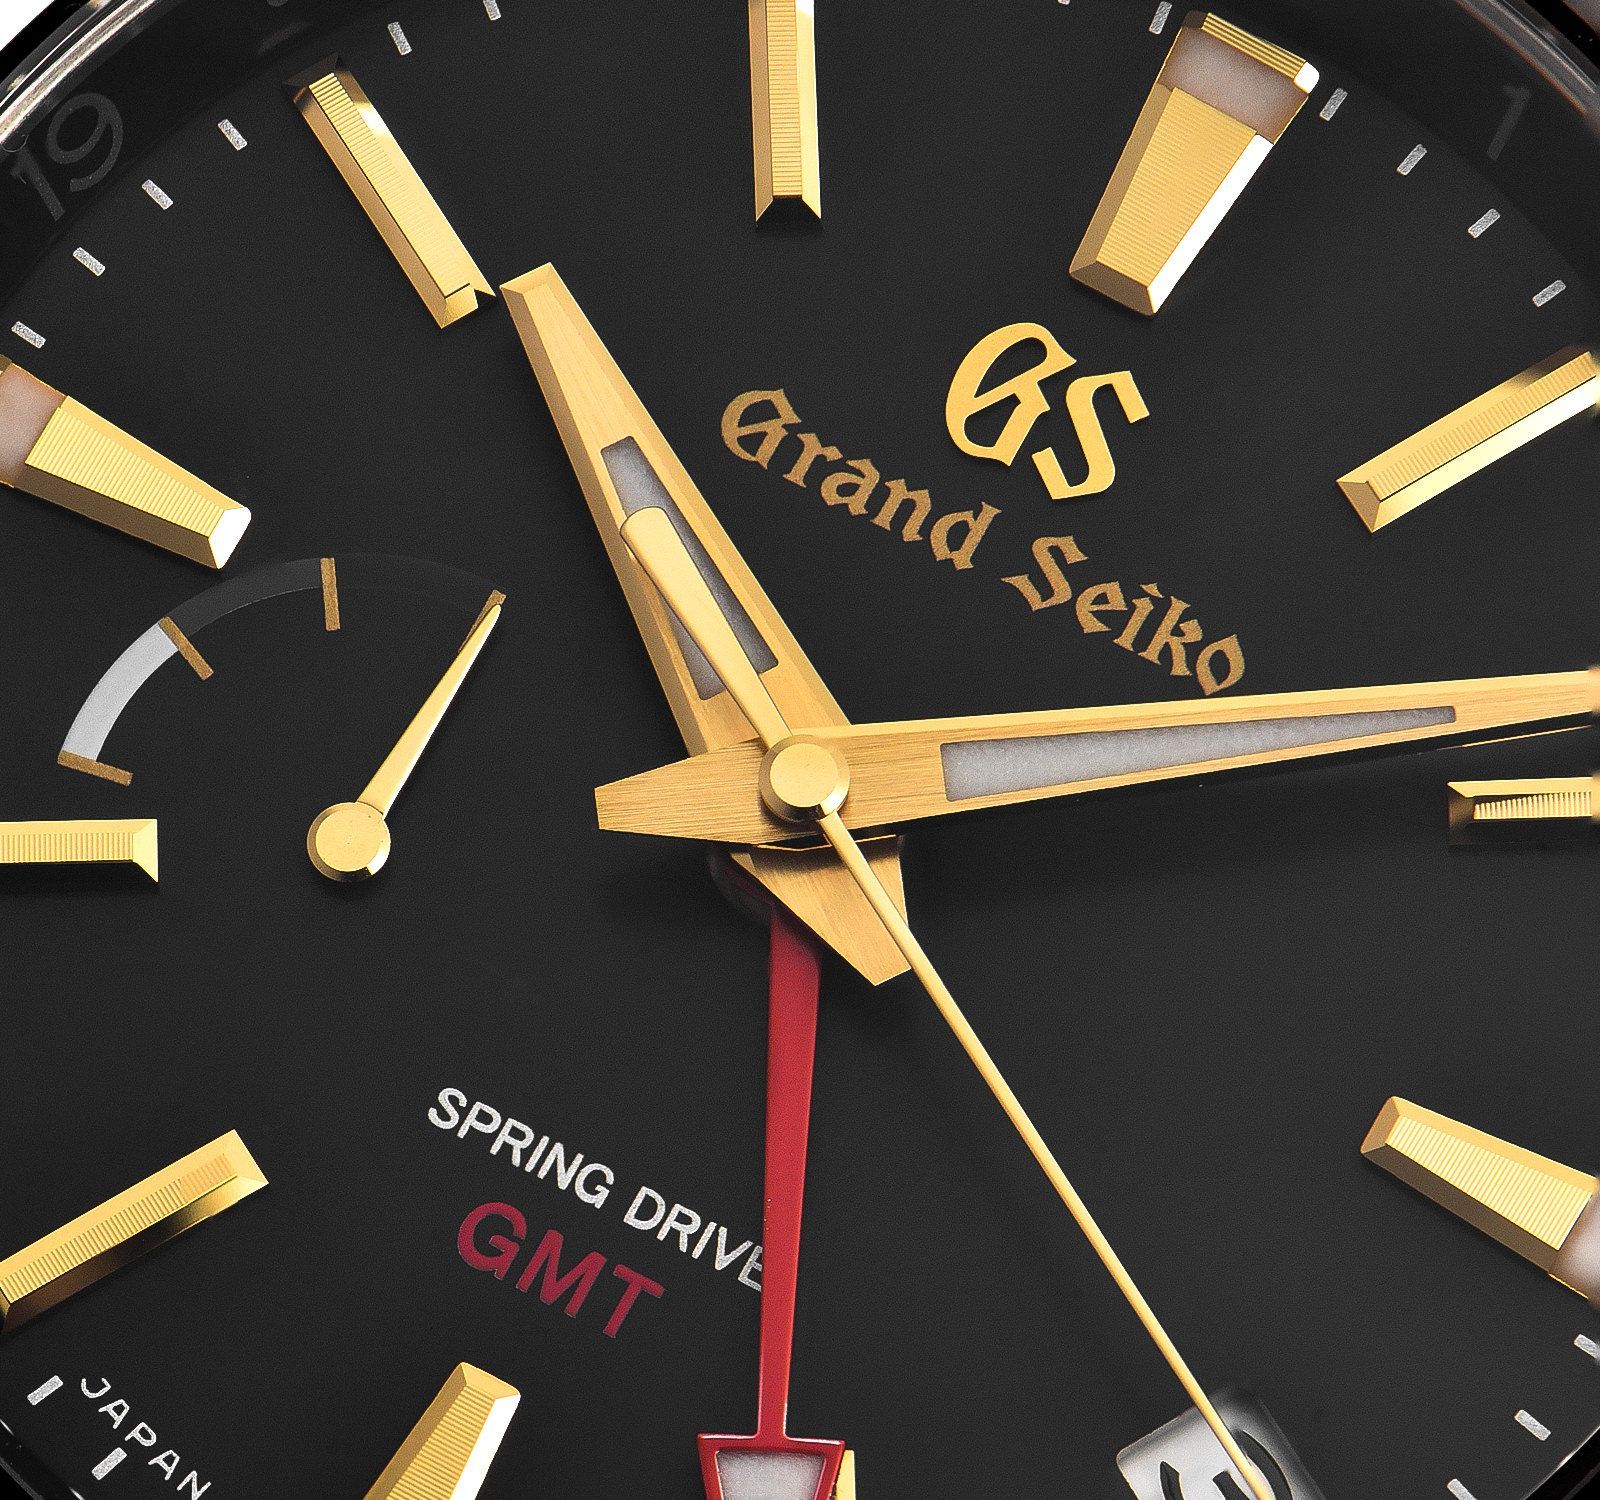 Grand Seiko Watches